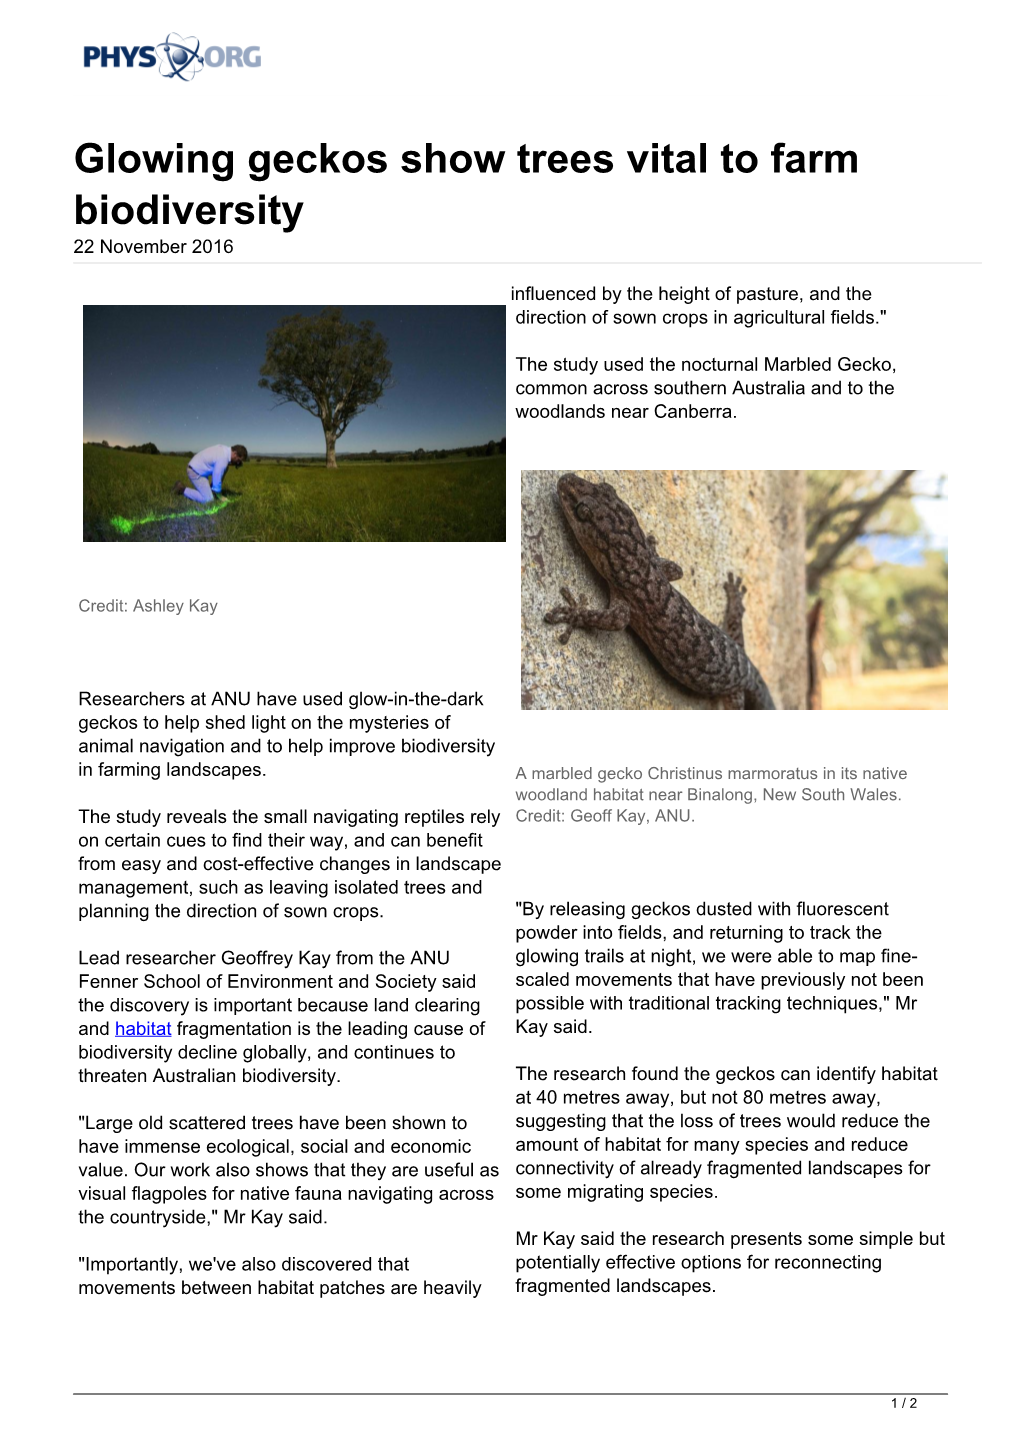 Glowing Geckos Show Trees Vital to Farm Biodiversity 22 November 2016